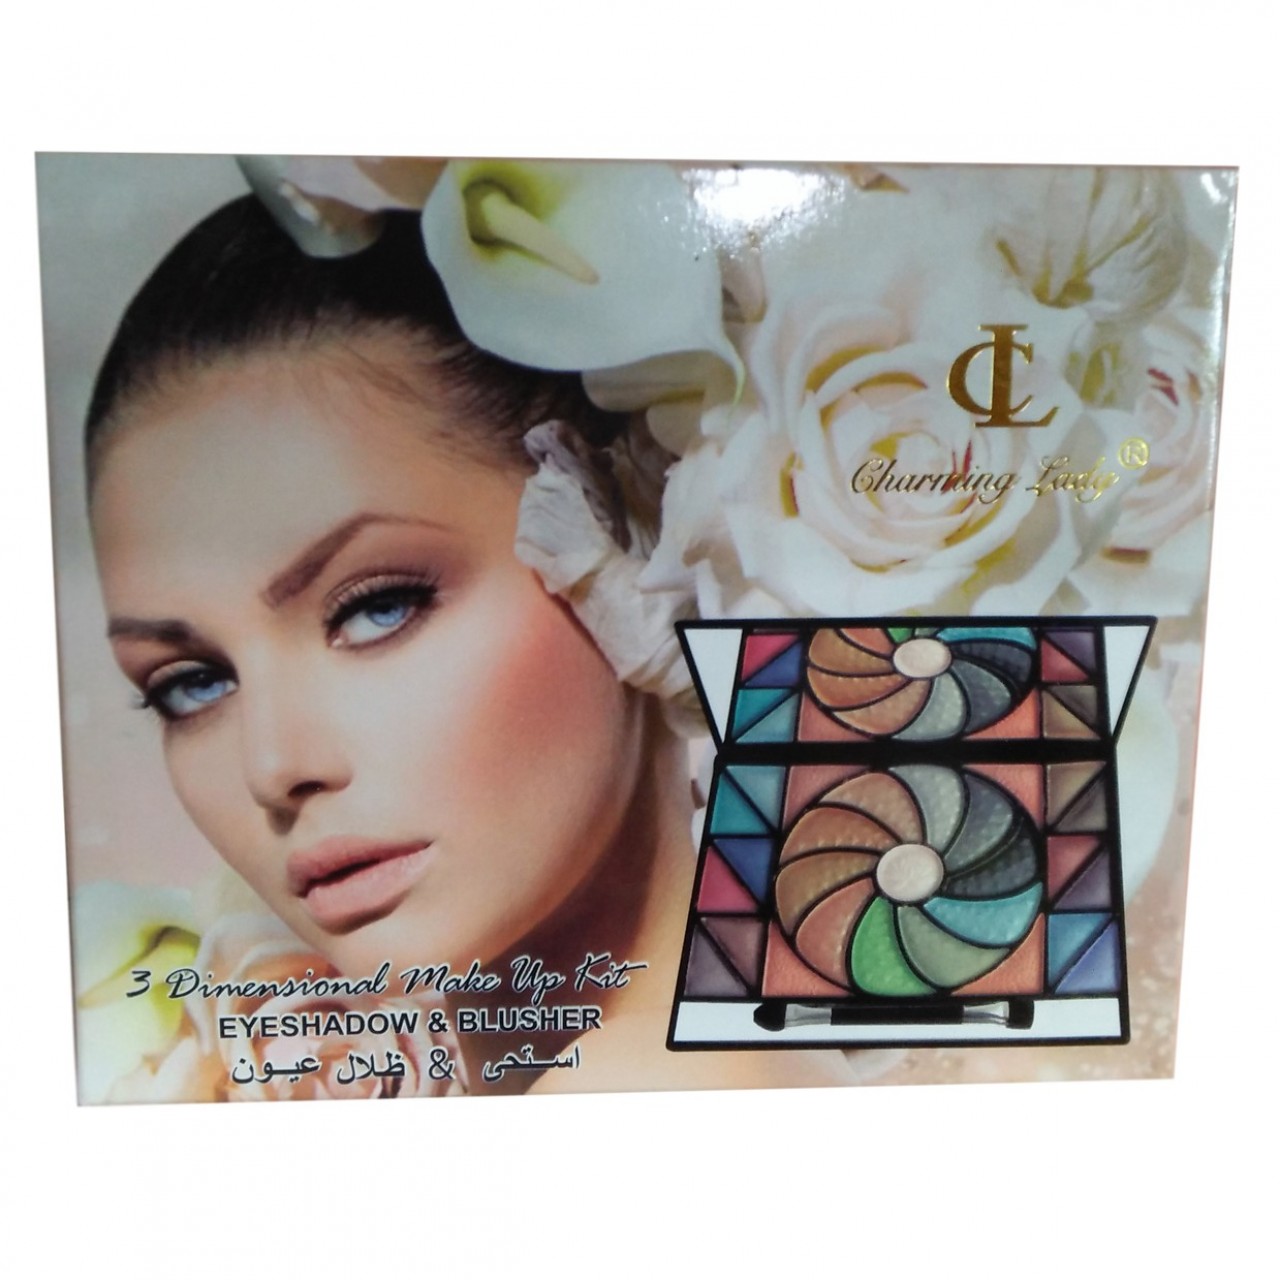 Charming Lady 3-Dimensional 26 Color Makeup Kit - Eyeshadow & Blusher